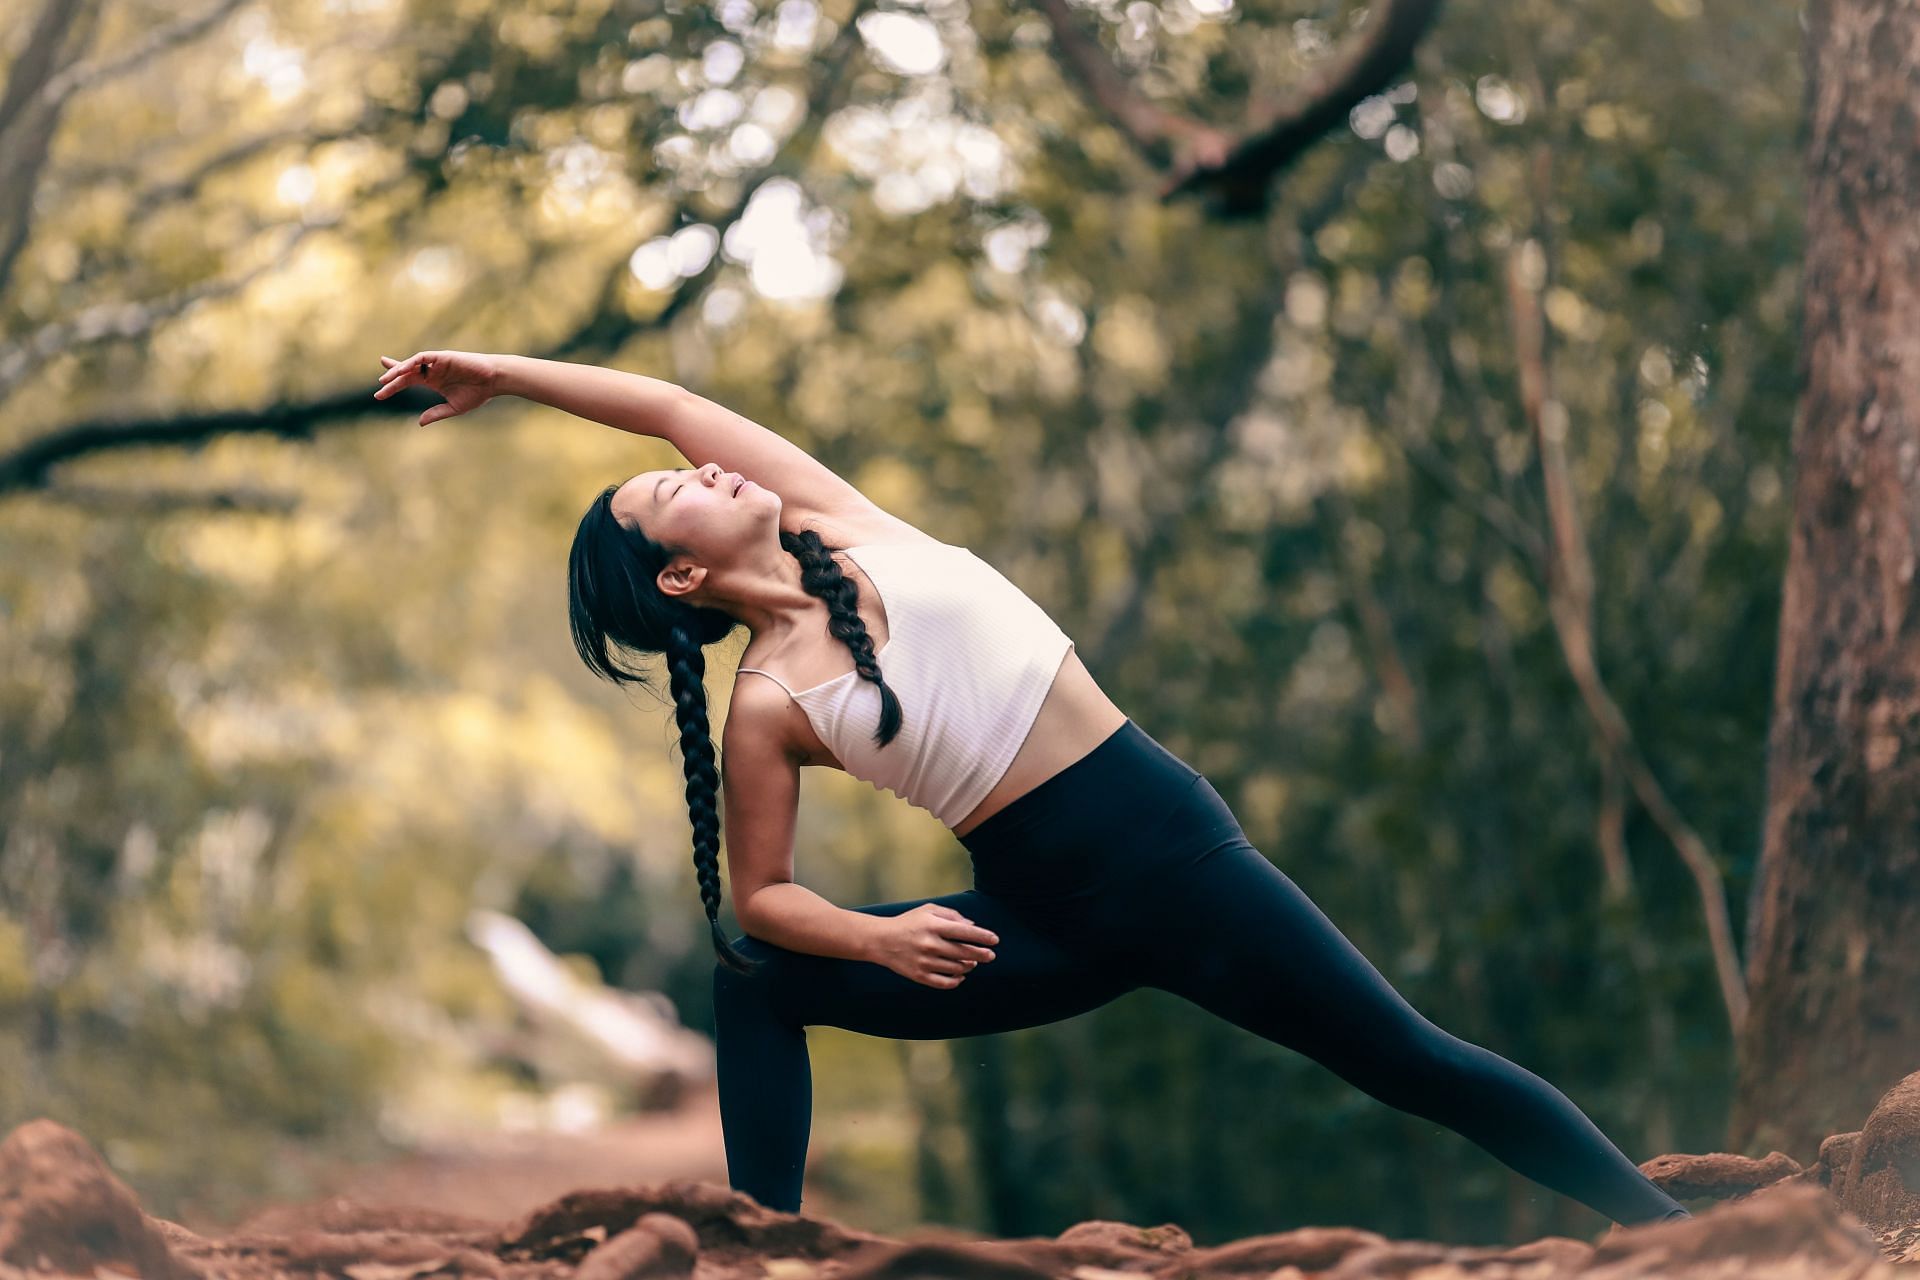 Yoga exercises helps in enhancing flexibility and body balance. (Image via Unsplash/ Luemen Rutkowski)